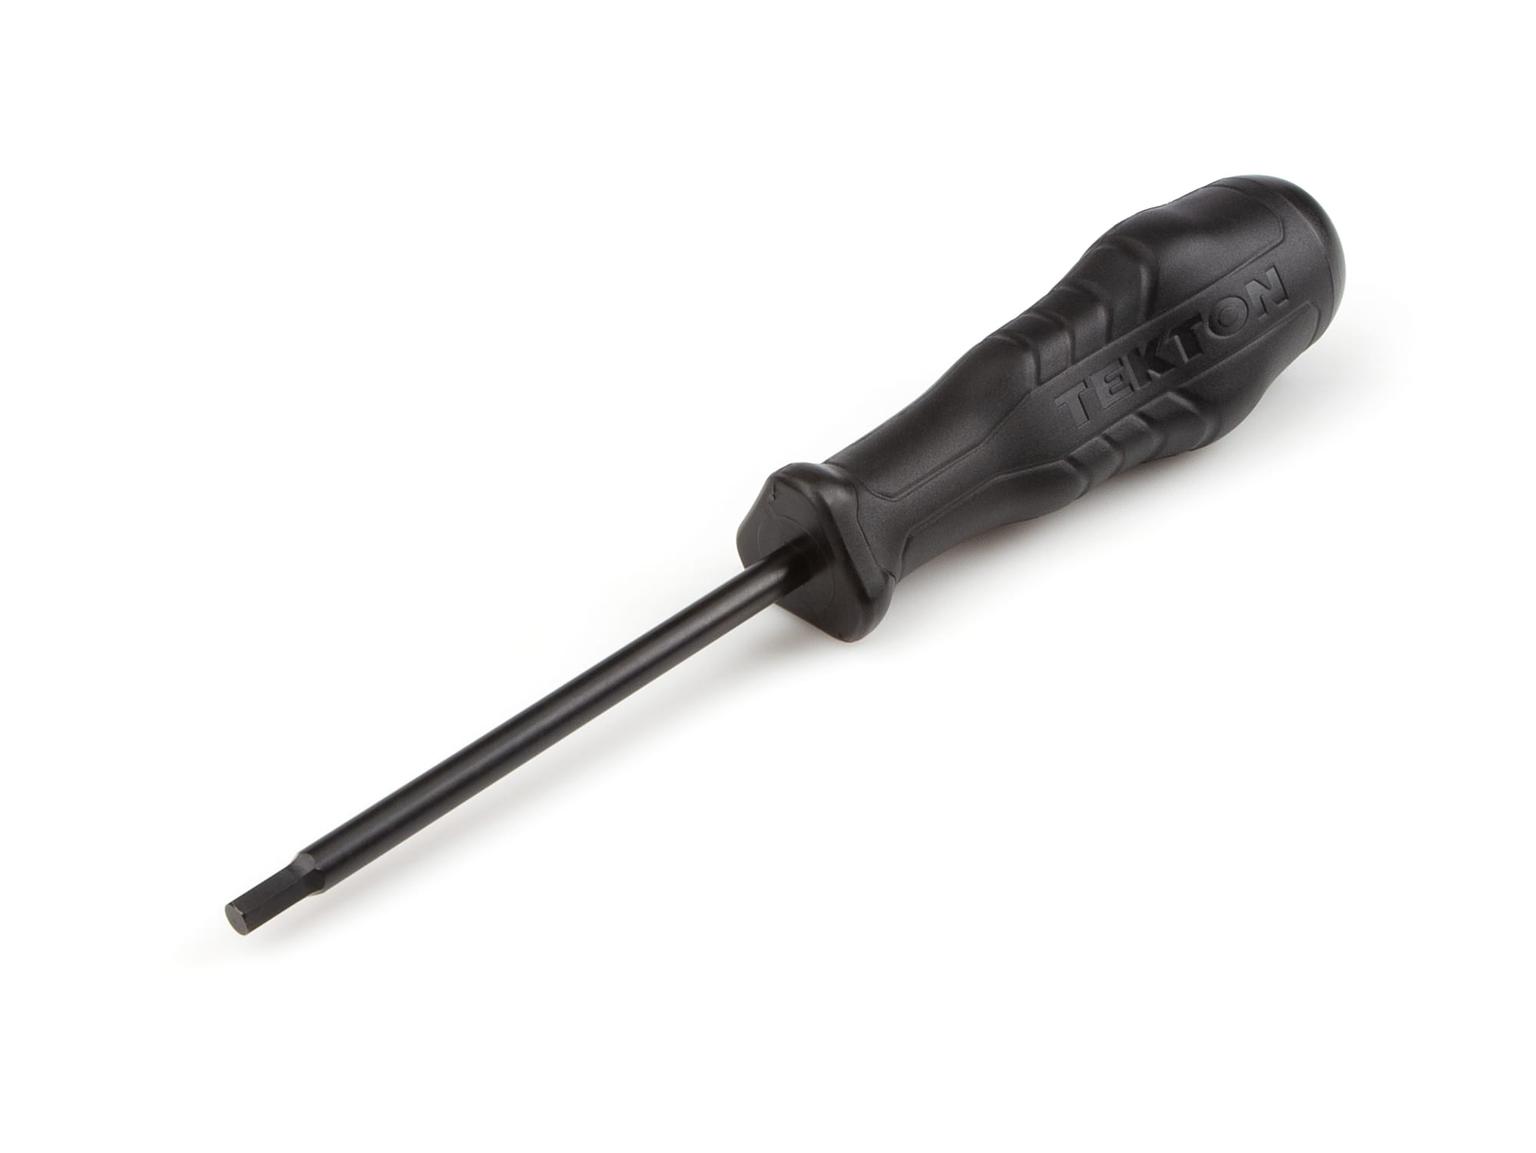 TEKTON DHX11188-T 3/16 Inch Hex High-Torque Black Oxide Blade Screwdriver